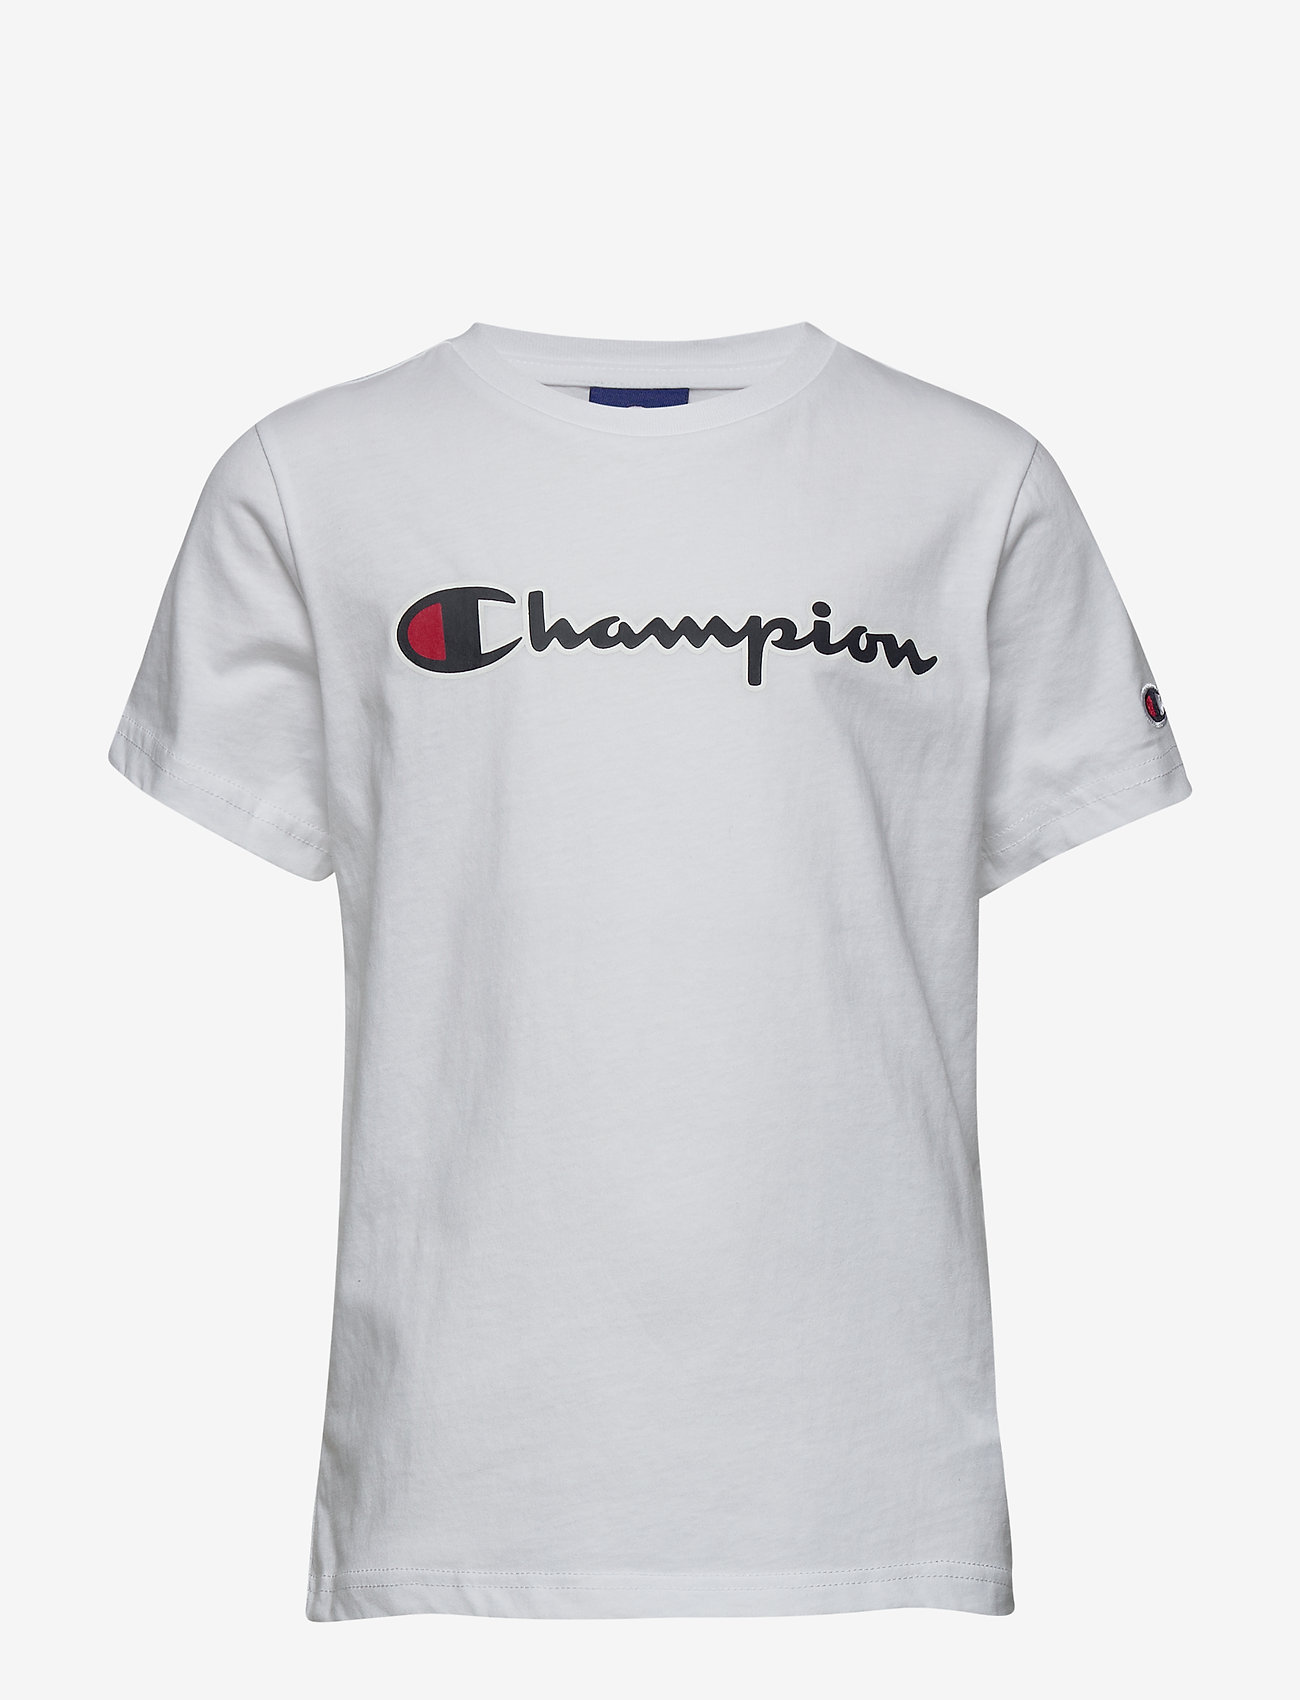 Crewneck T-shirt (White) (15 